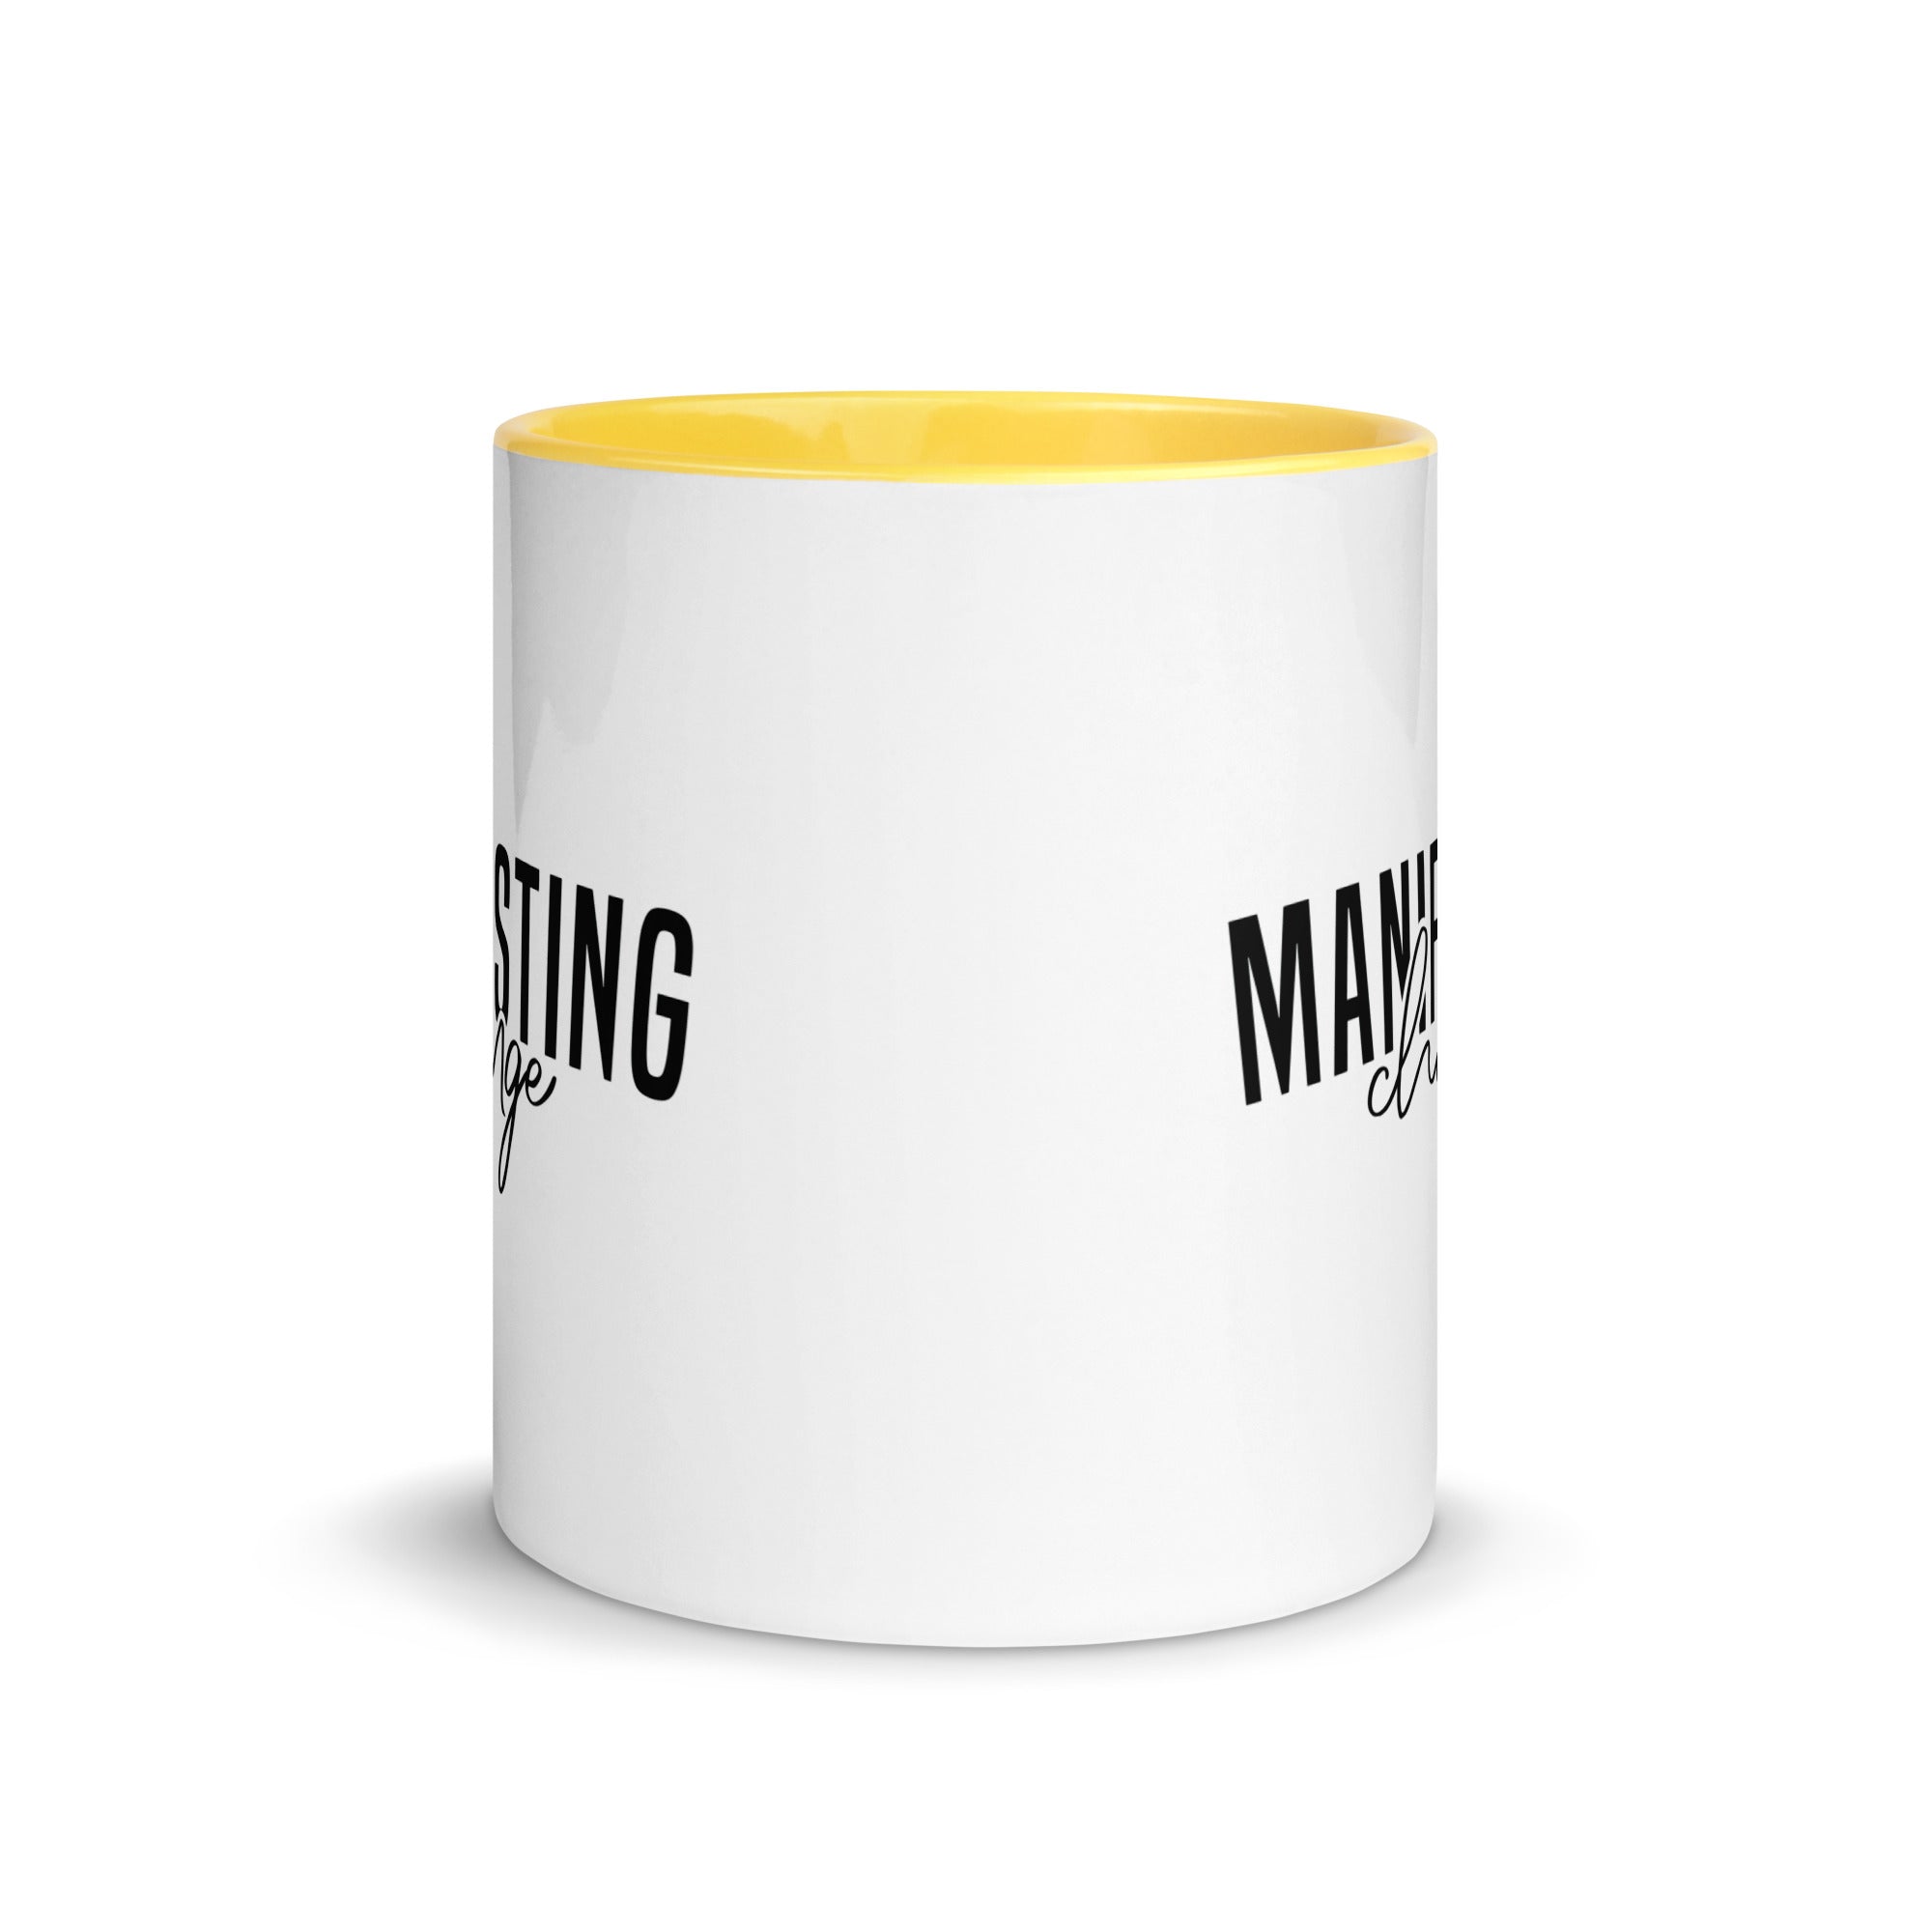 Mug with Color Inside | Manifesting Change